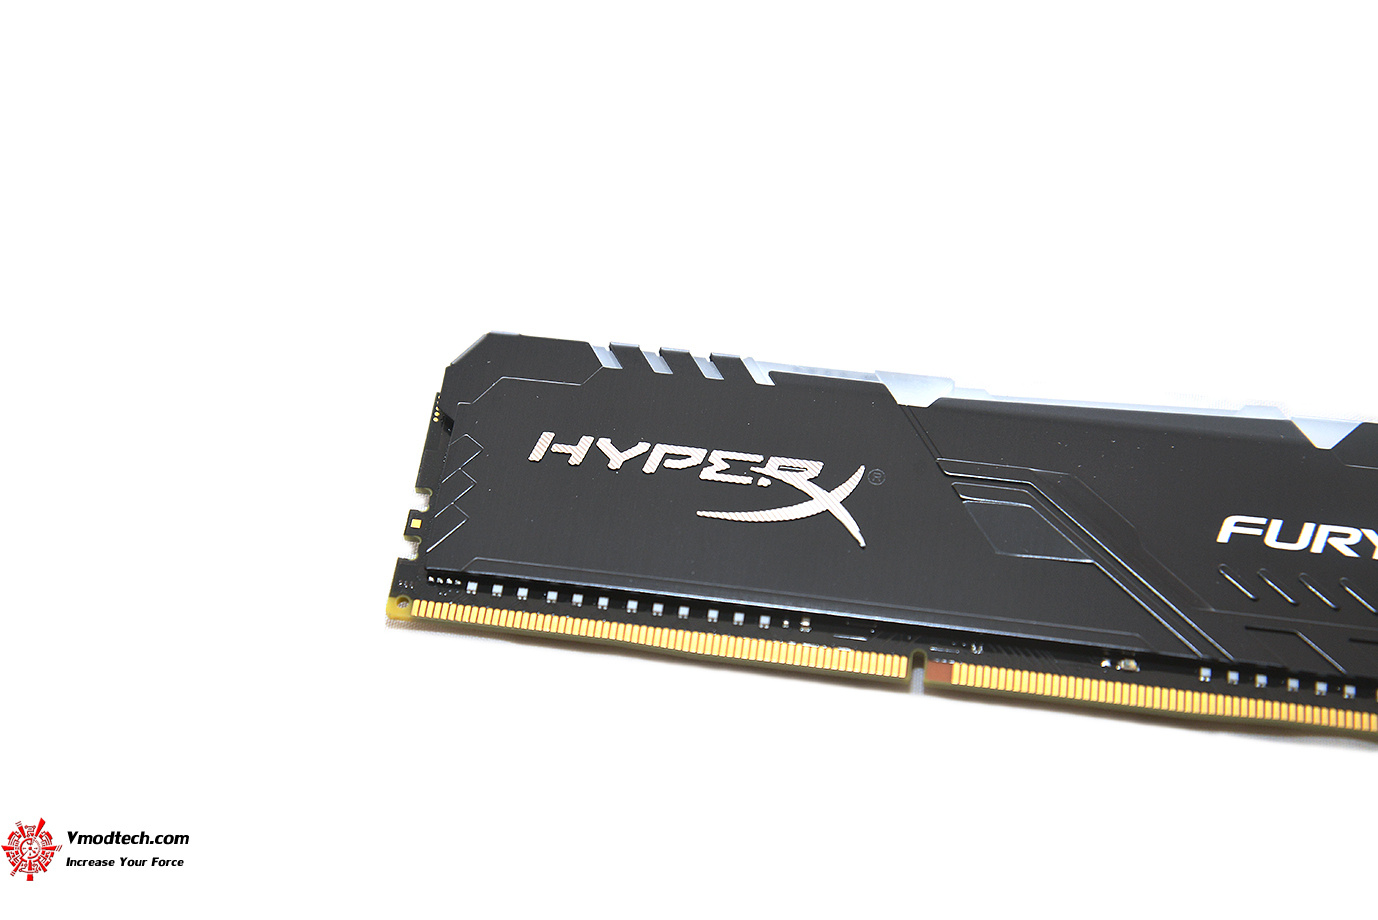 dsc 9522 HyperX FURY DDR4 RGB 3200MHz 16 18 18 1.35V 8GBX4 32GB REVIEW